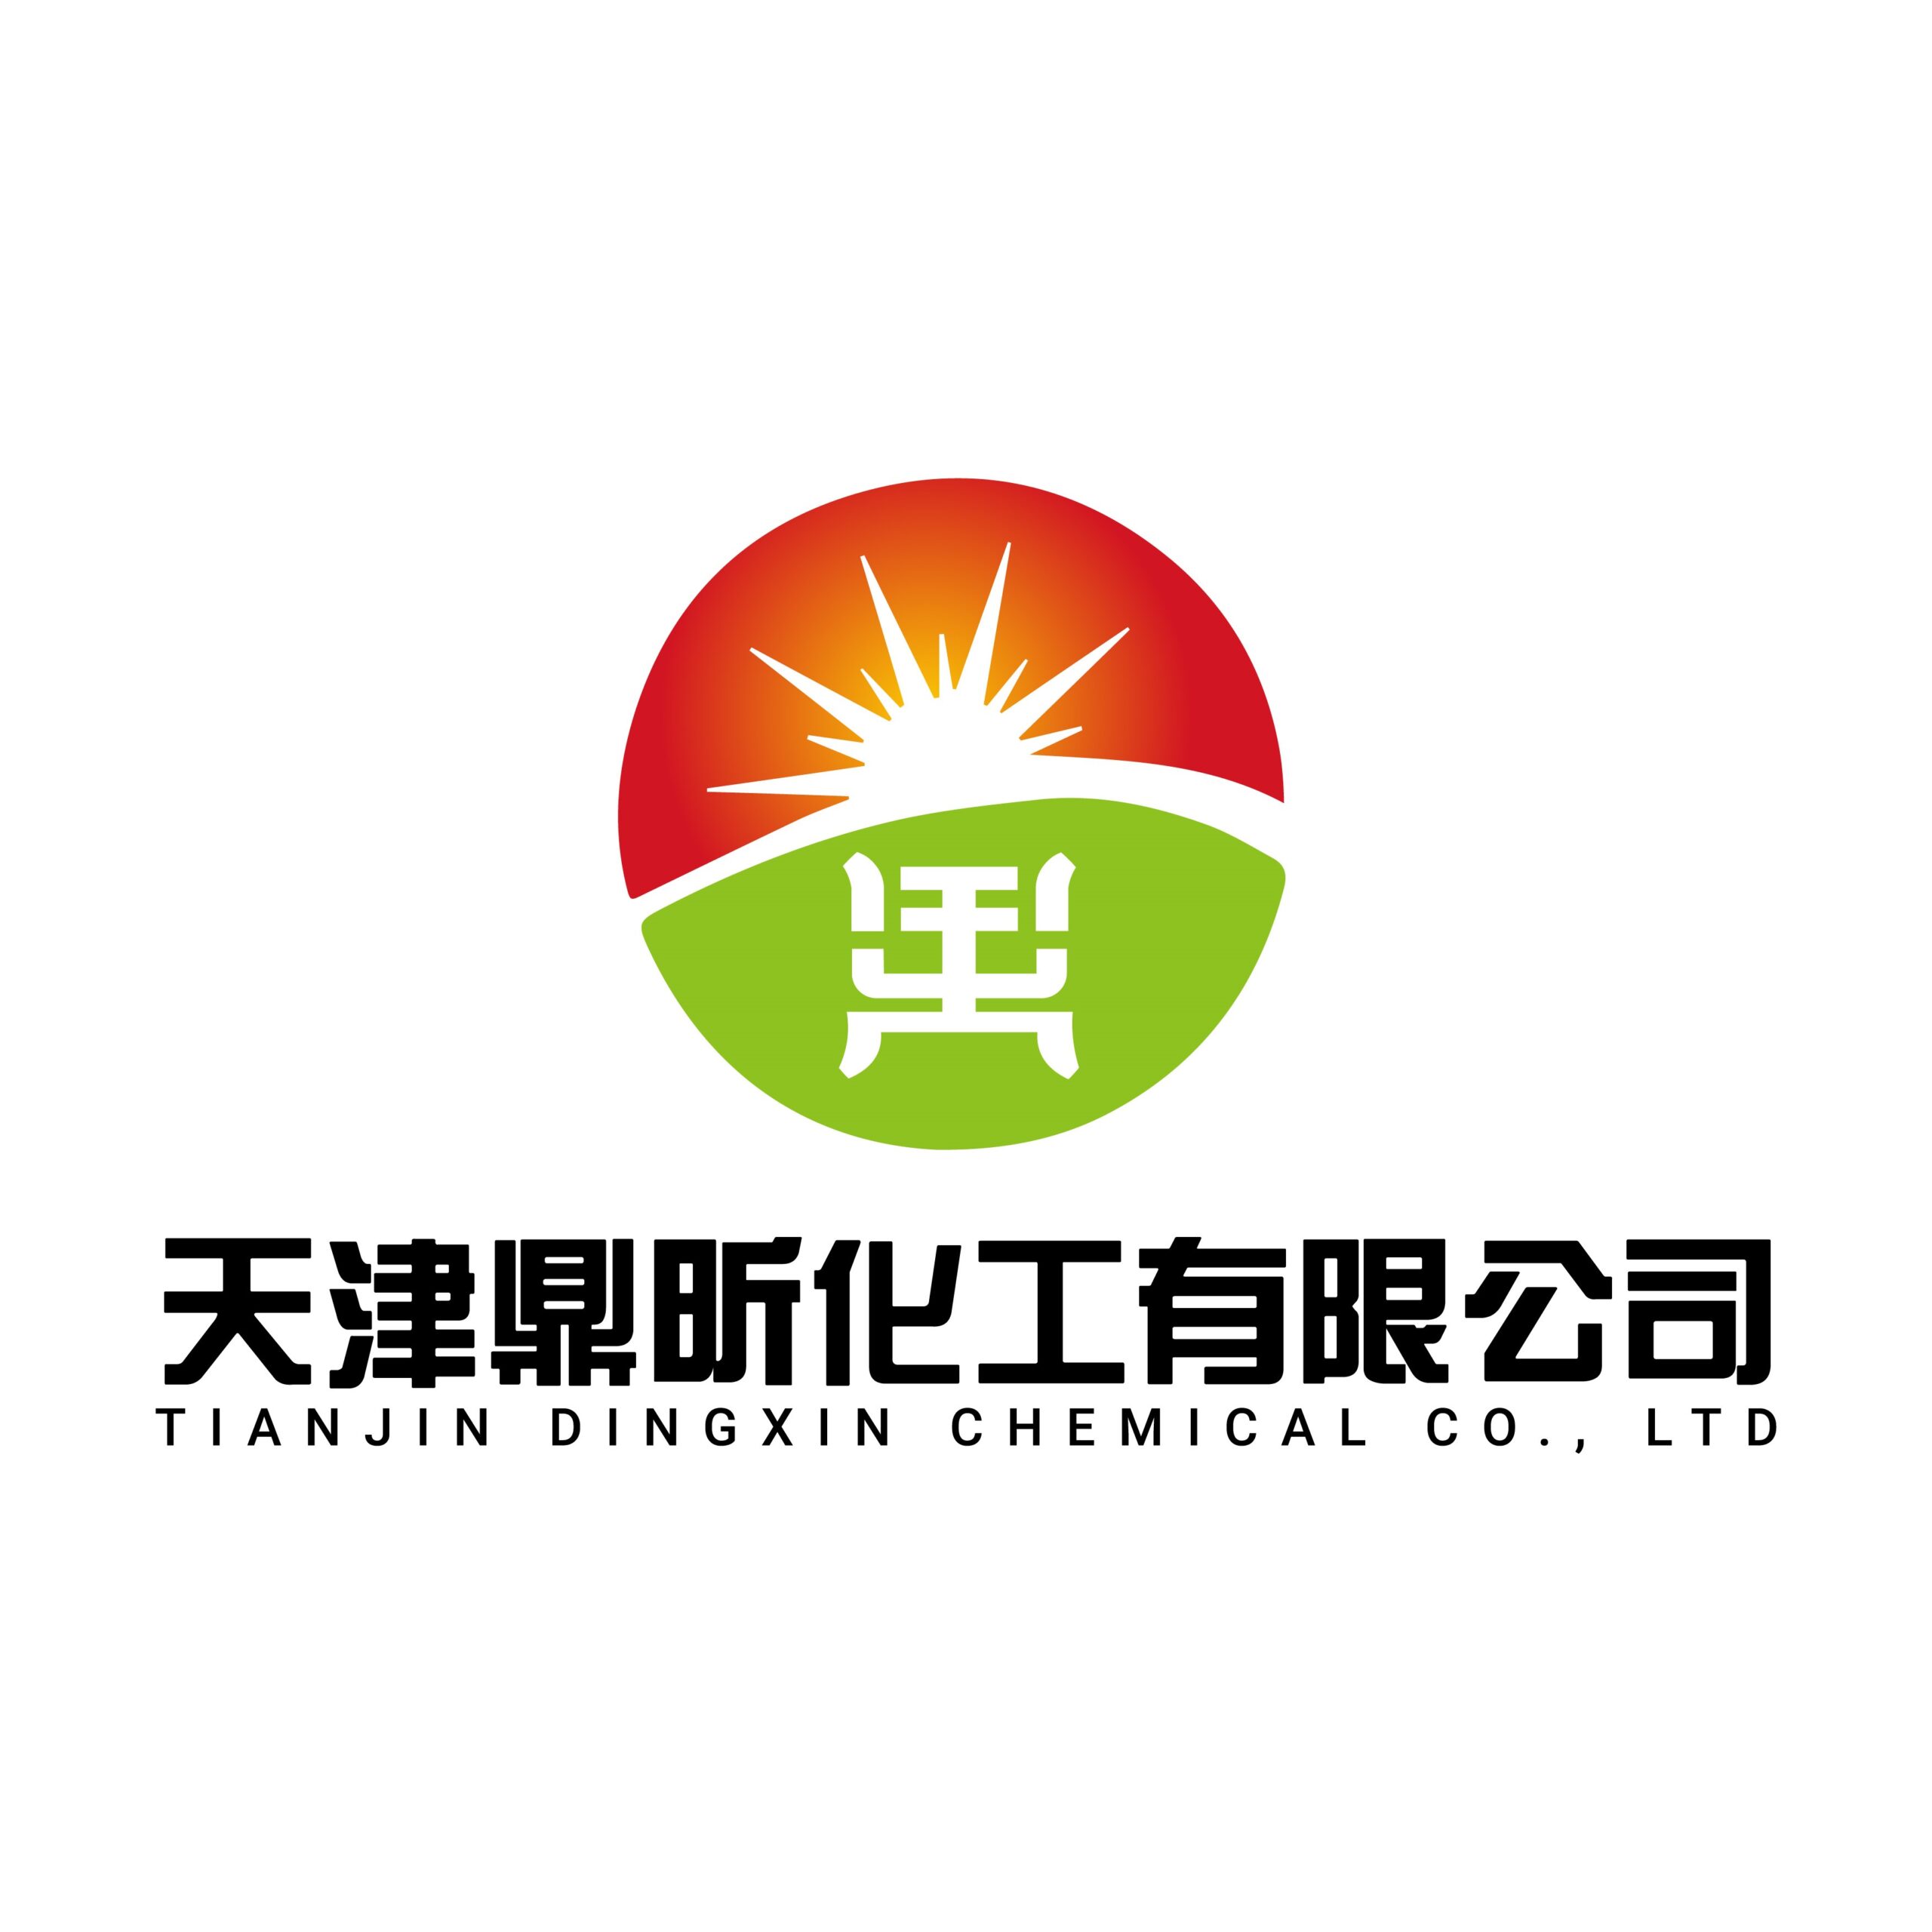 TIANJIN DINGXIN CHEMICAL CO., LTD